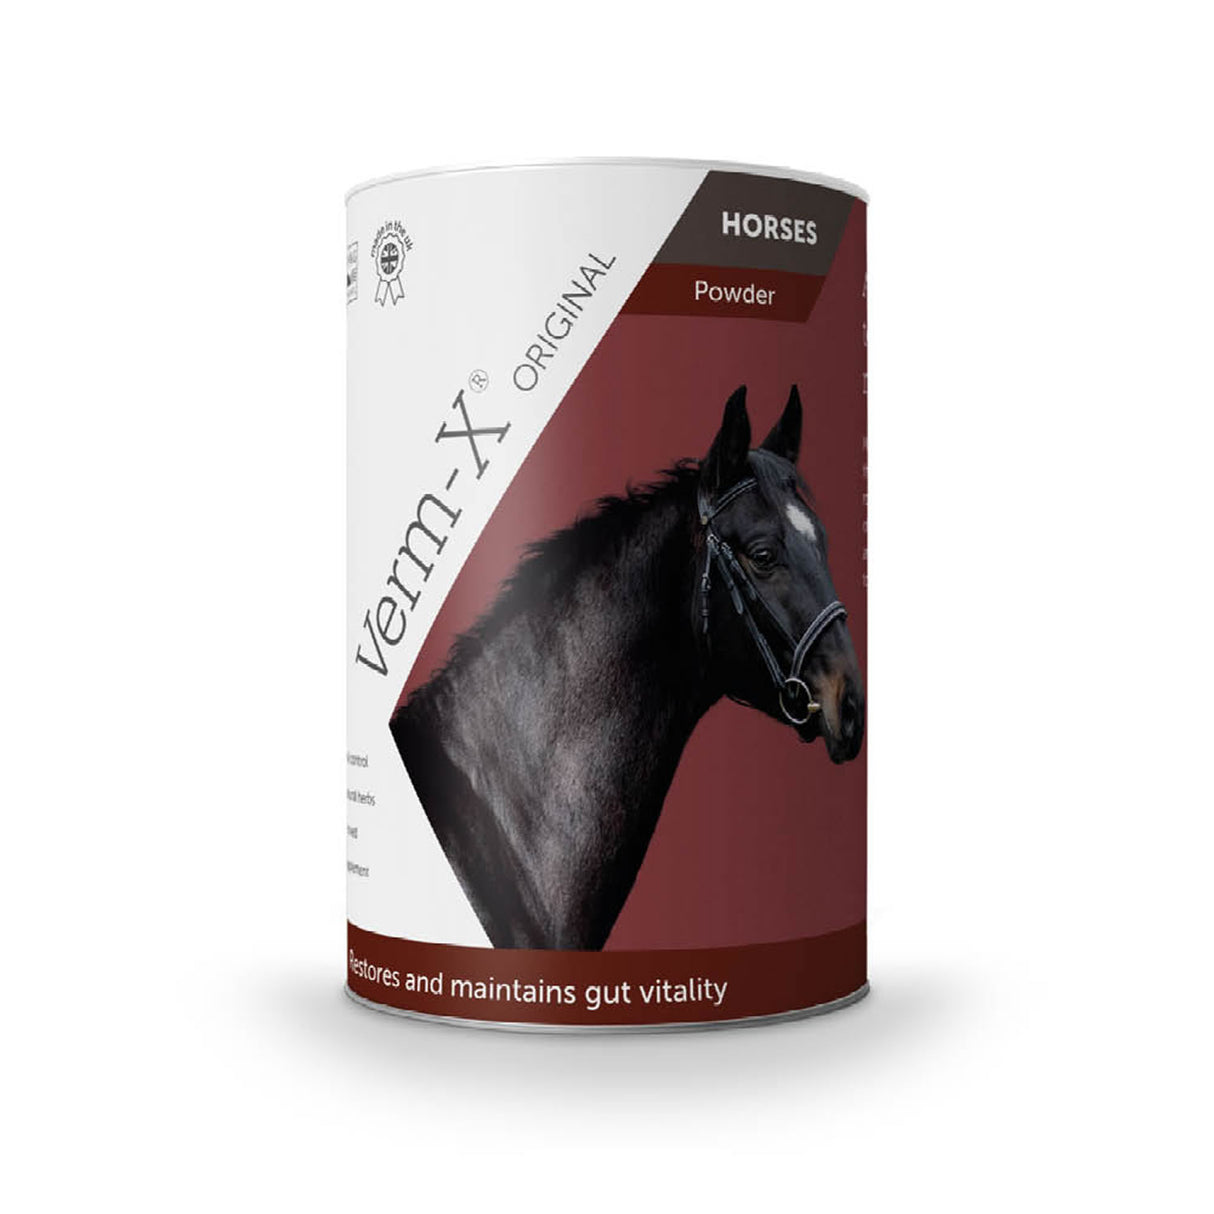 VERM-X Herbal Powder For Horses & Ponies 3555